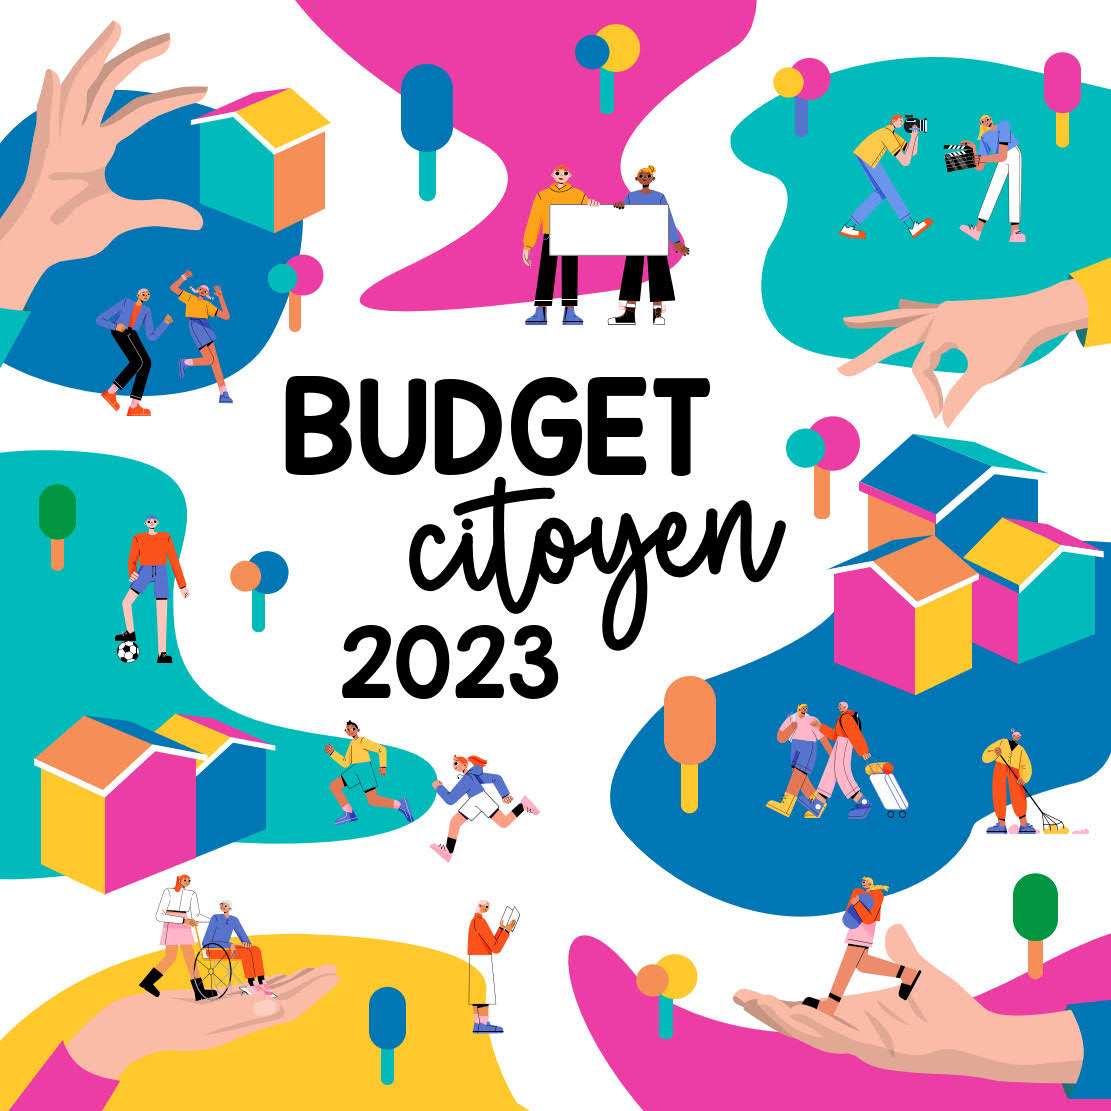 Budget citoyen 2023